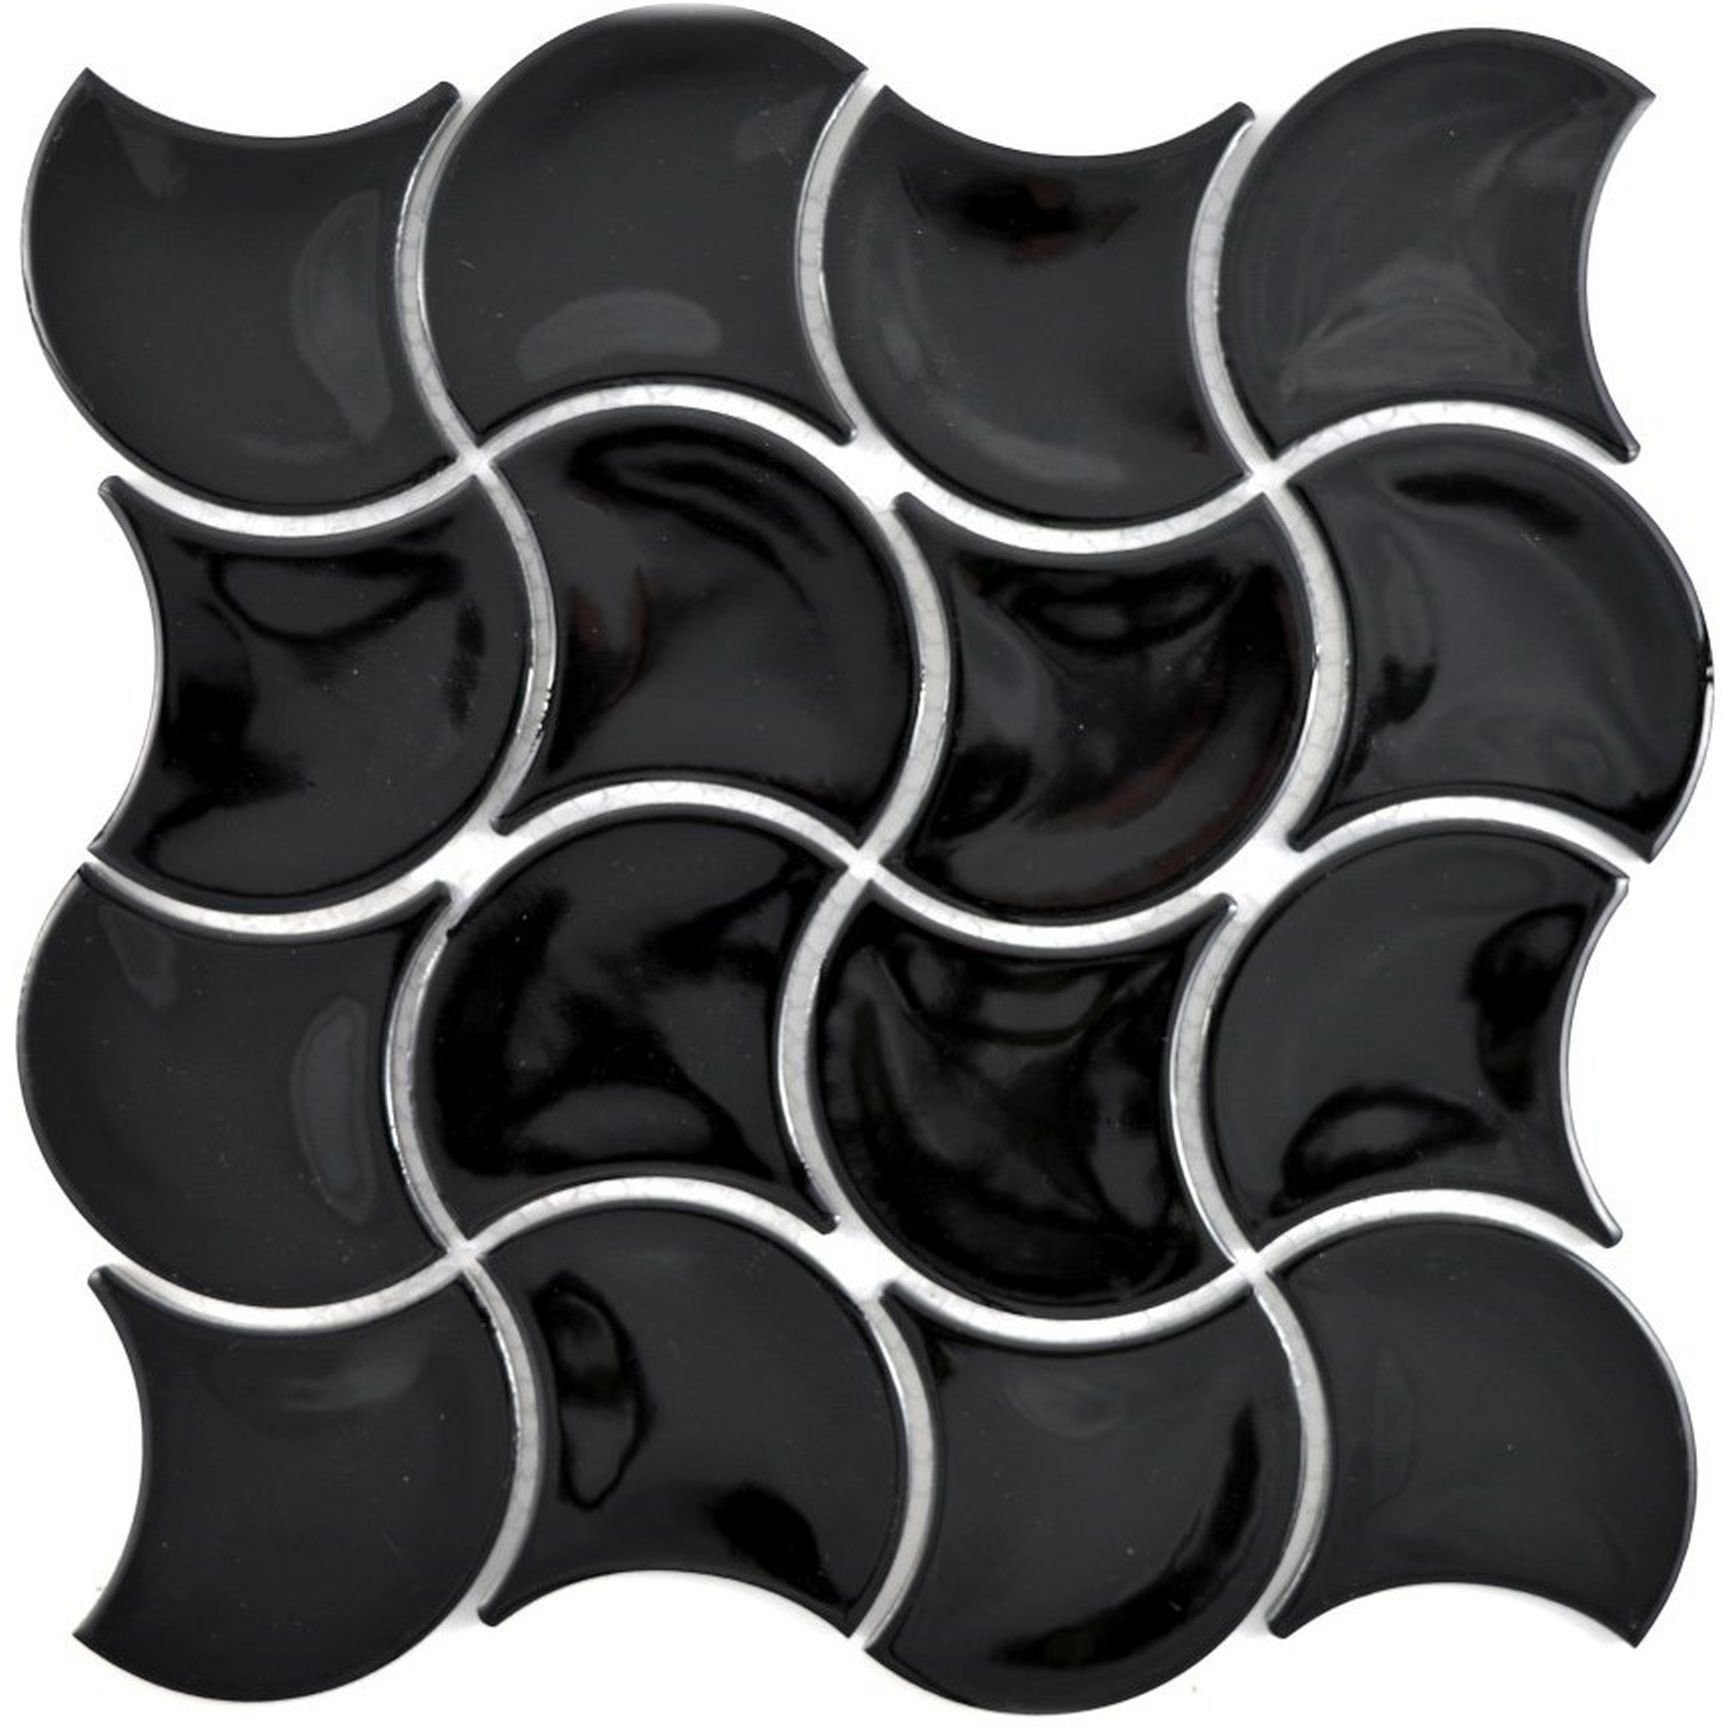 Mosani Mosaikfliesen Fächer Keramikmosaik Mosaikfliesen schwarz glänzend / 10 Matten